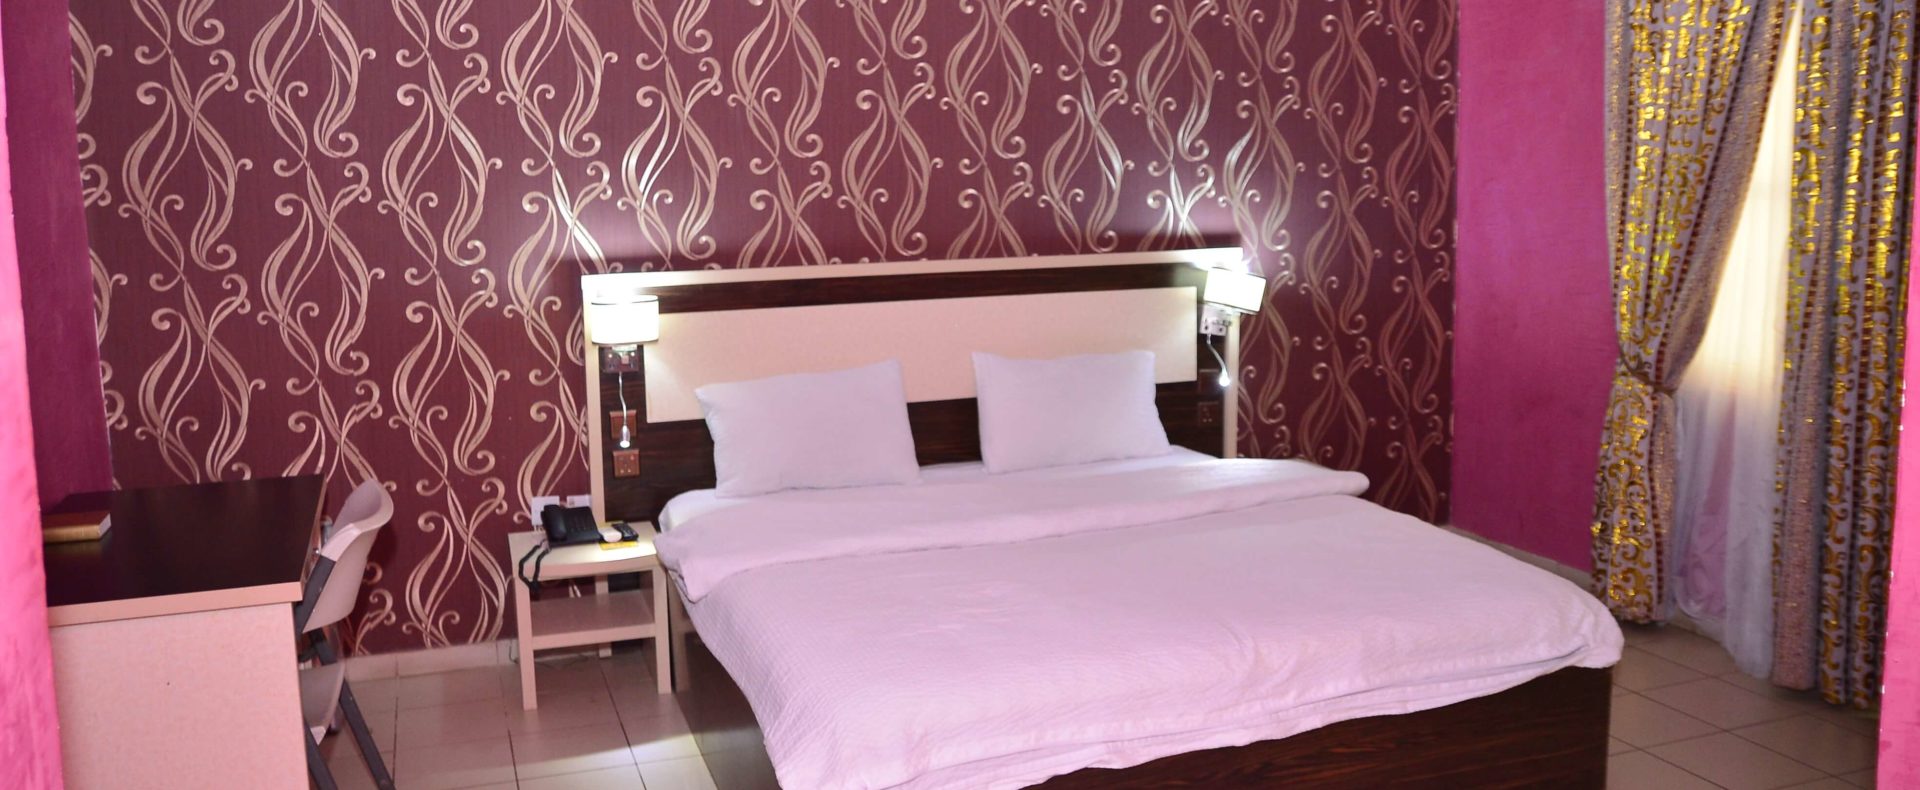 Hotel Standard In Ekiti Nigeria